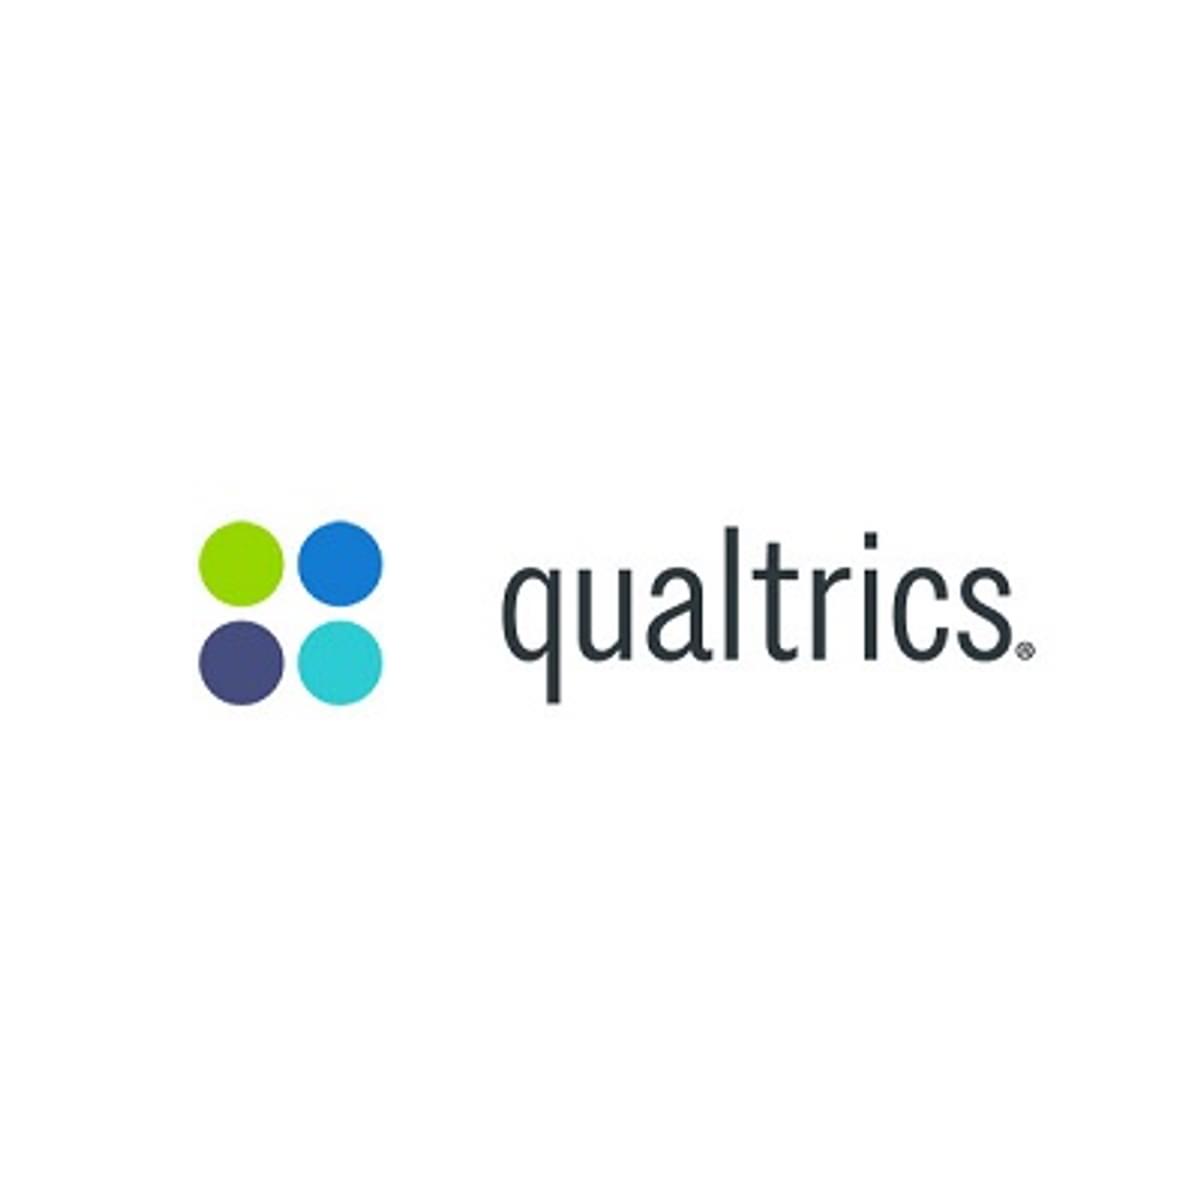 SAP brengt Qualtrics naar de Nasdaq beurs image